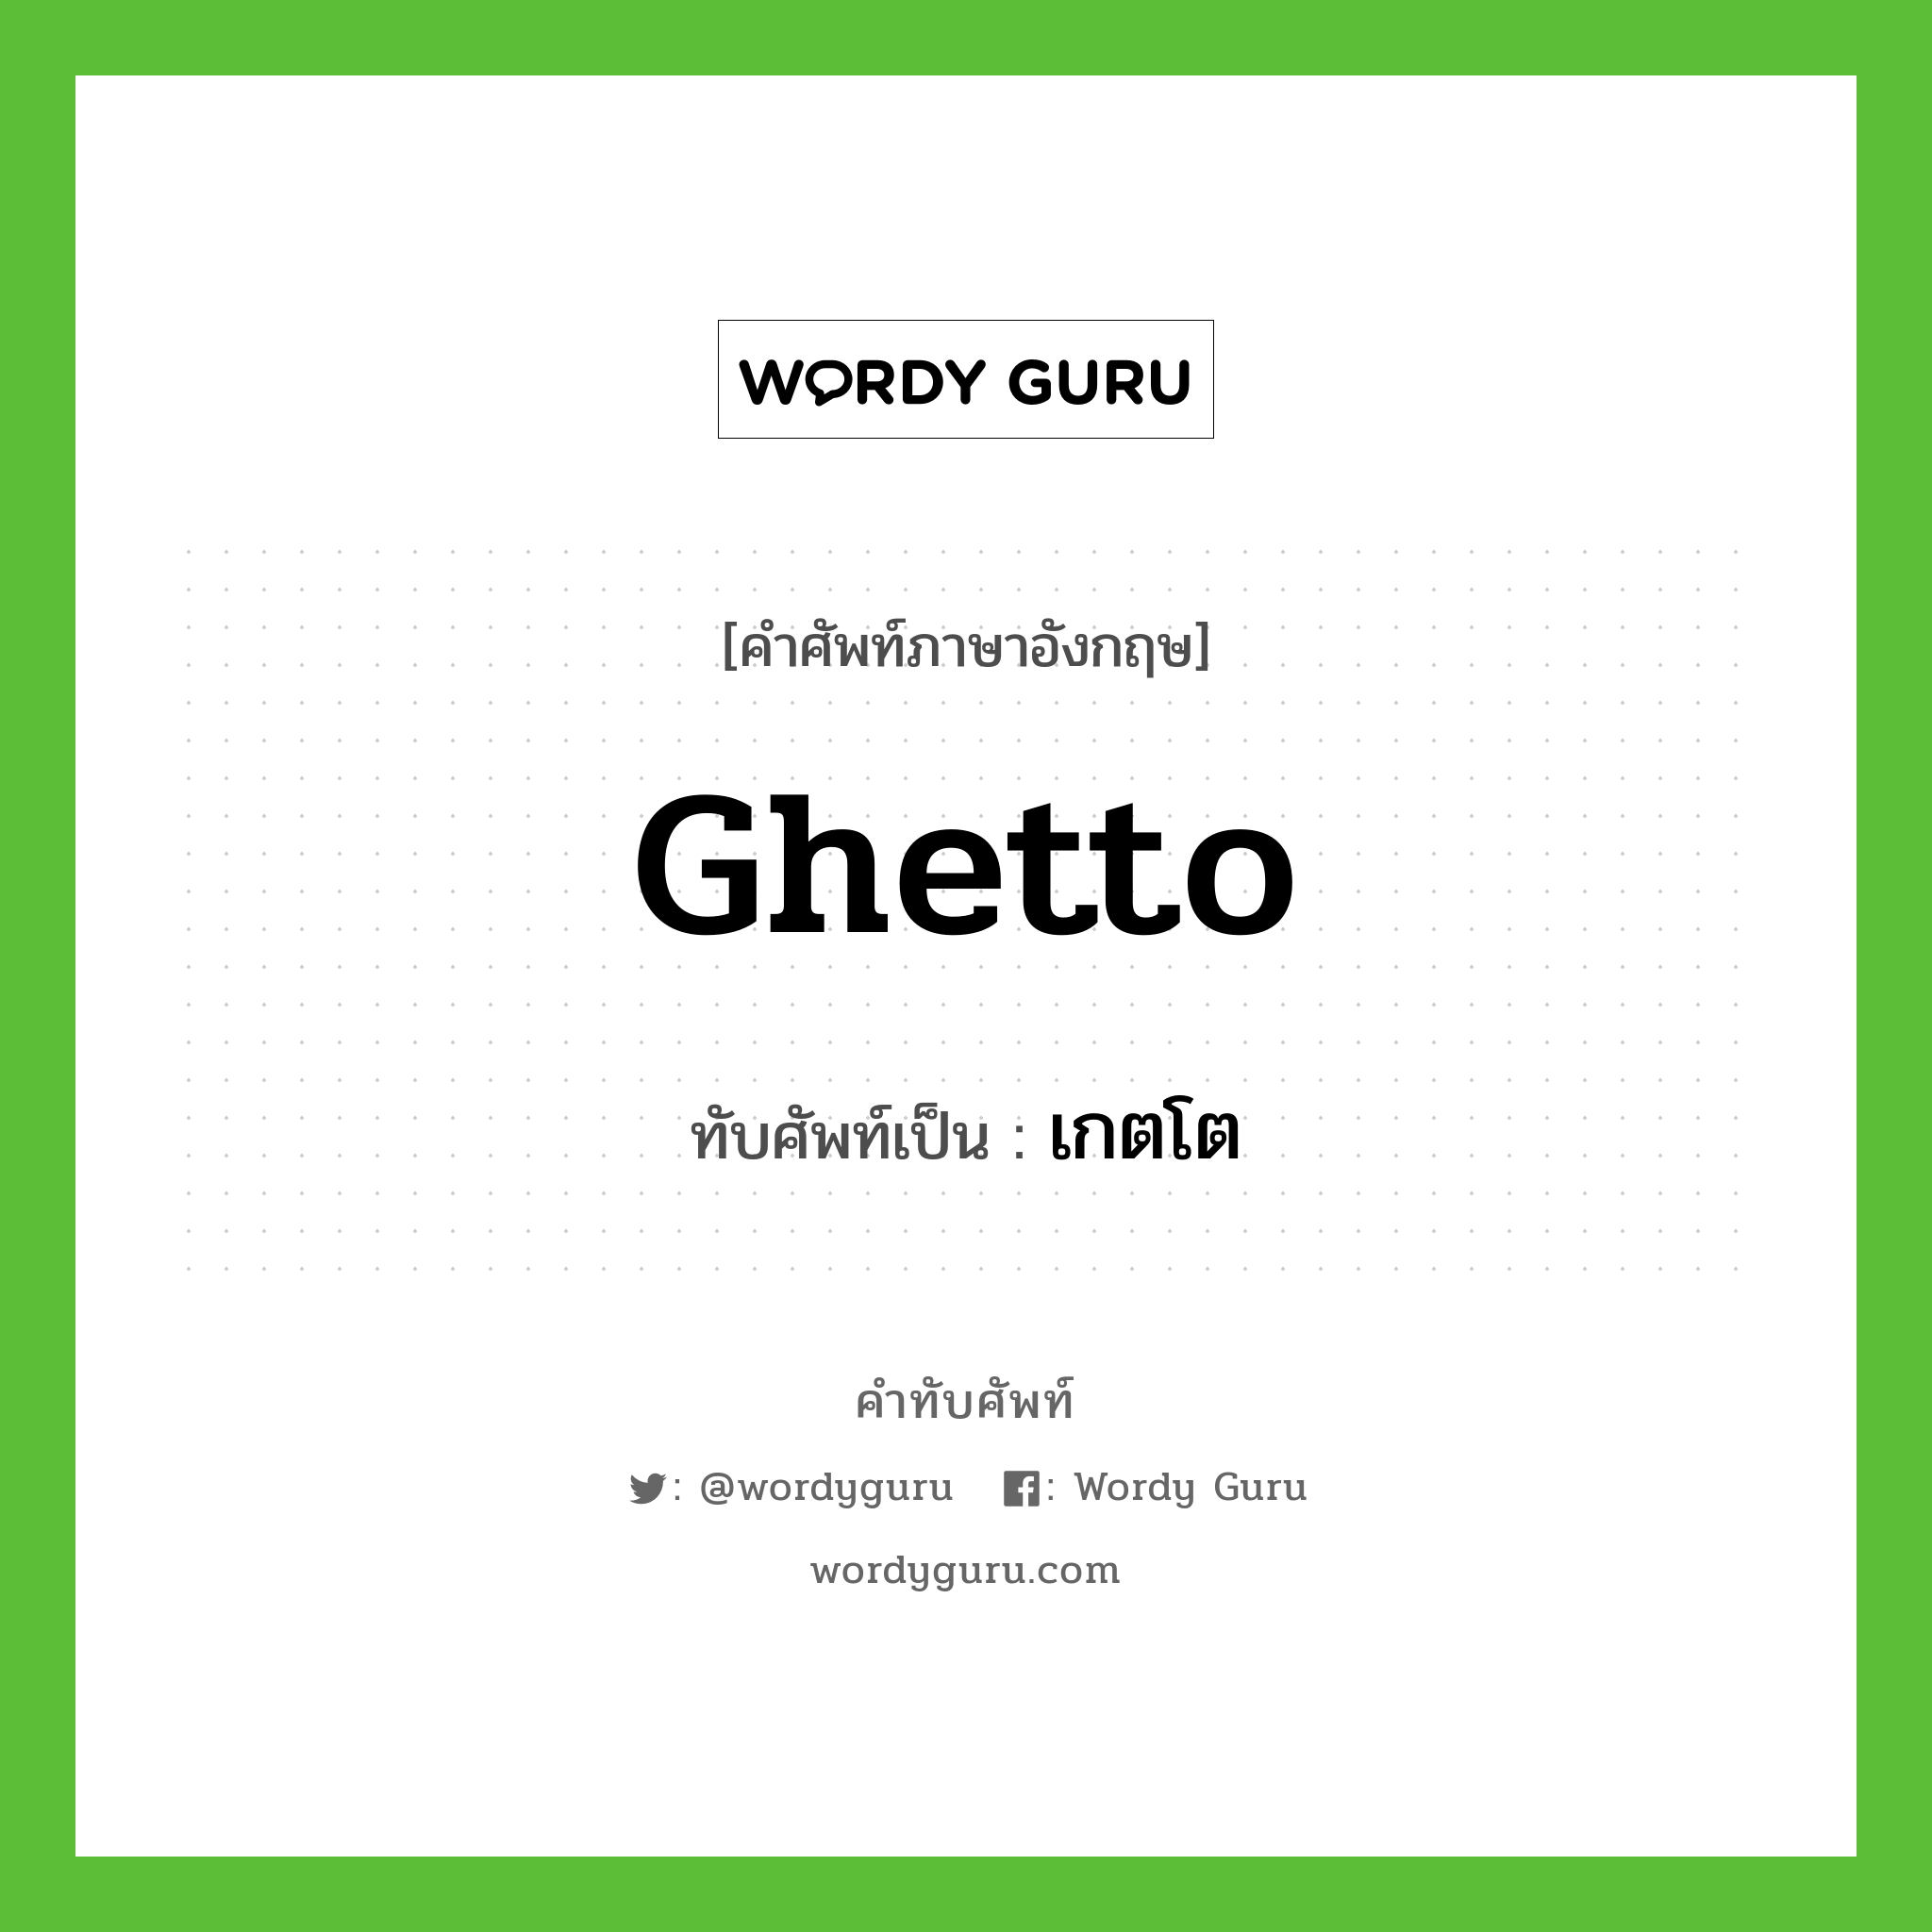 ghetto เขียนเป็นคำไทยว่าอะไร?, คำศัพท์ภาษาอังกฤษ ghetto ทับศัพท์เป็น เกตโต